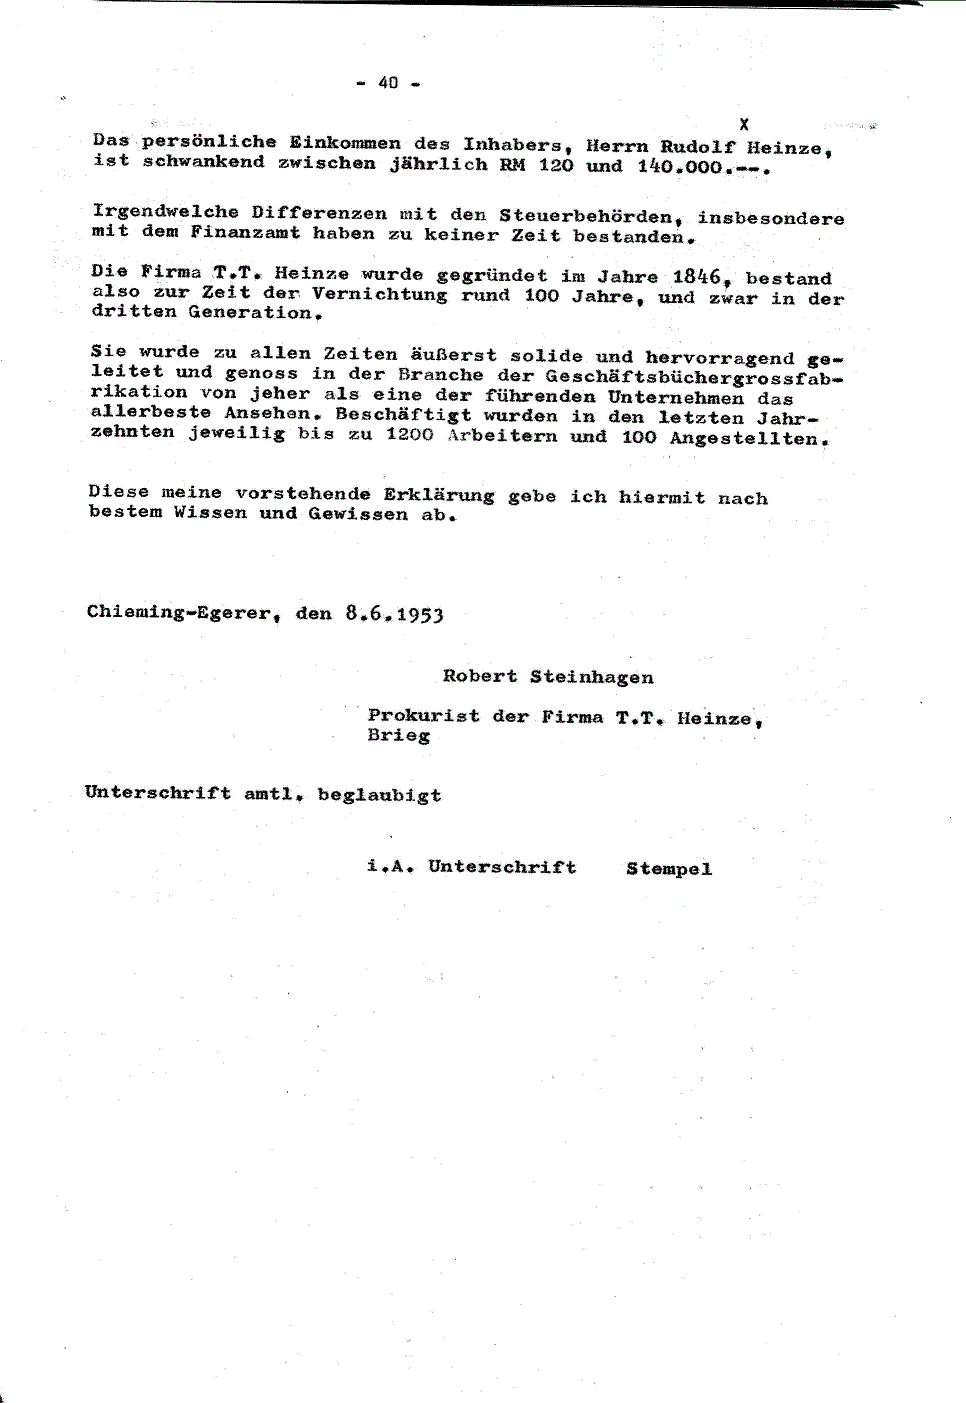 Steinhagen Transkript (2)